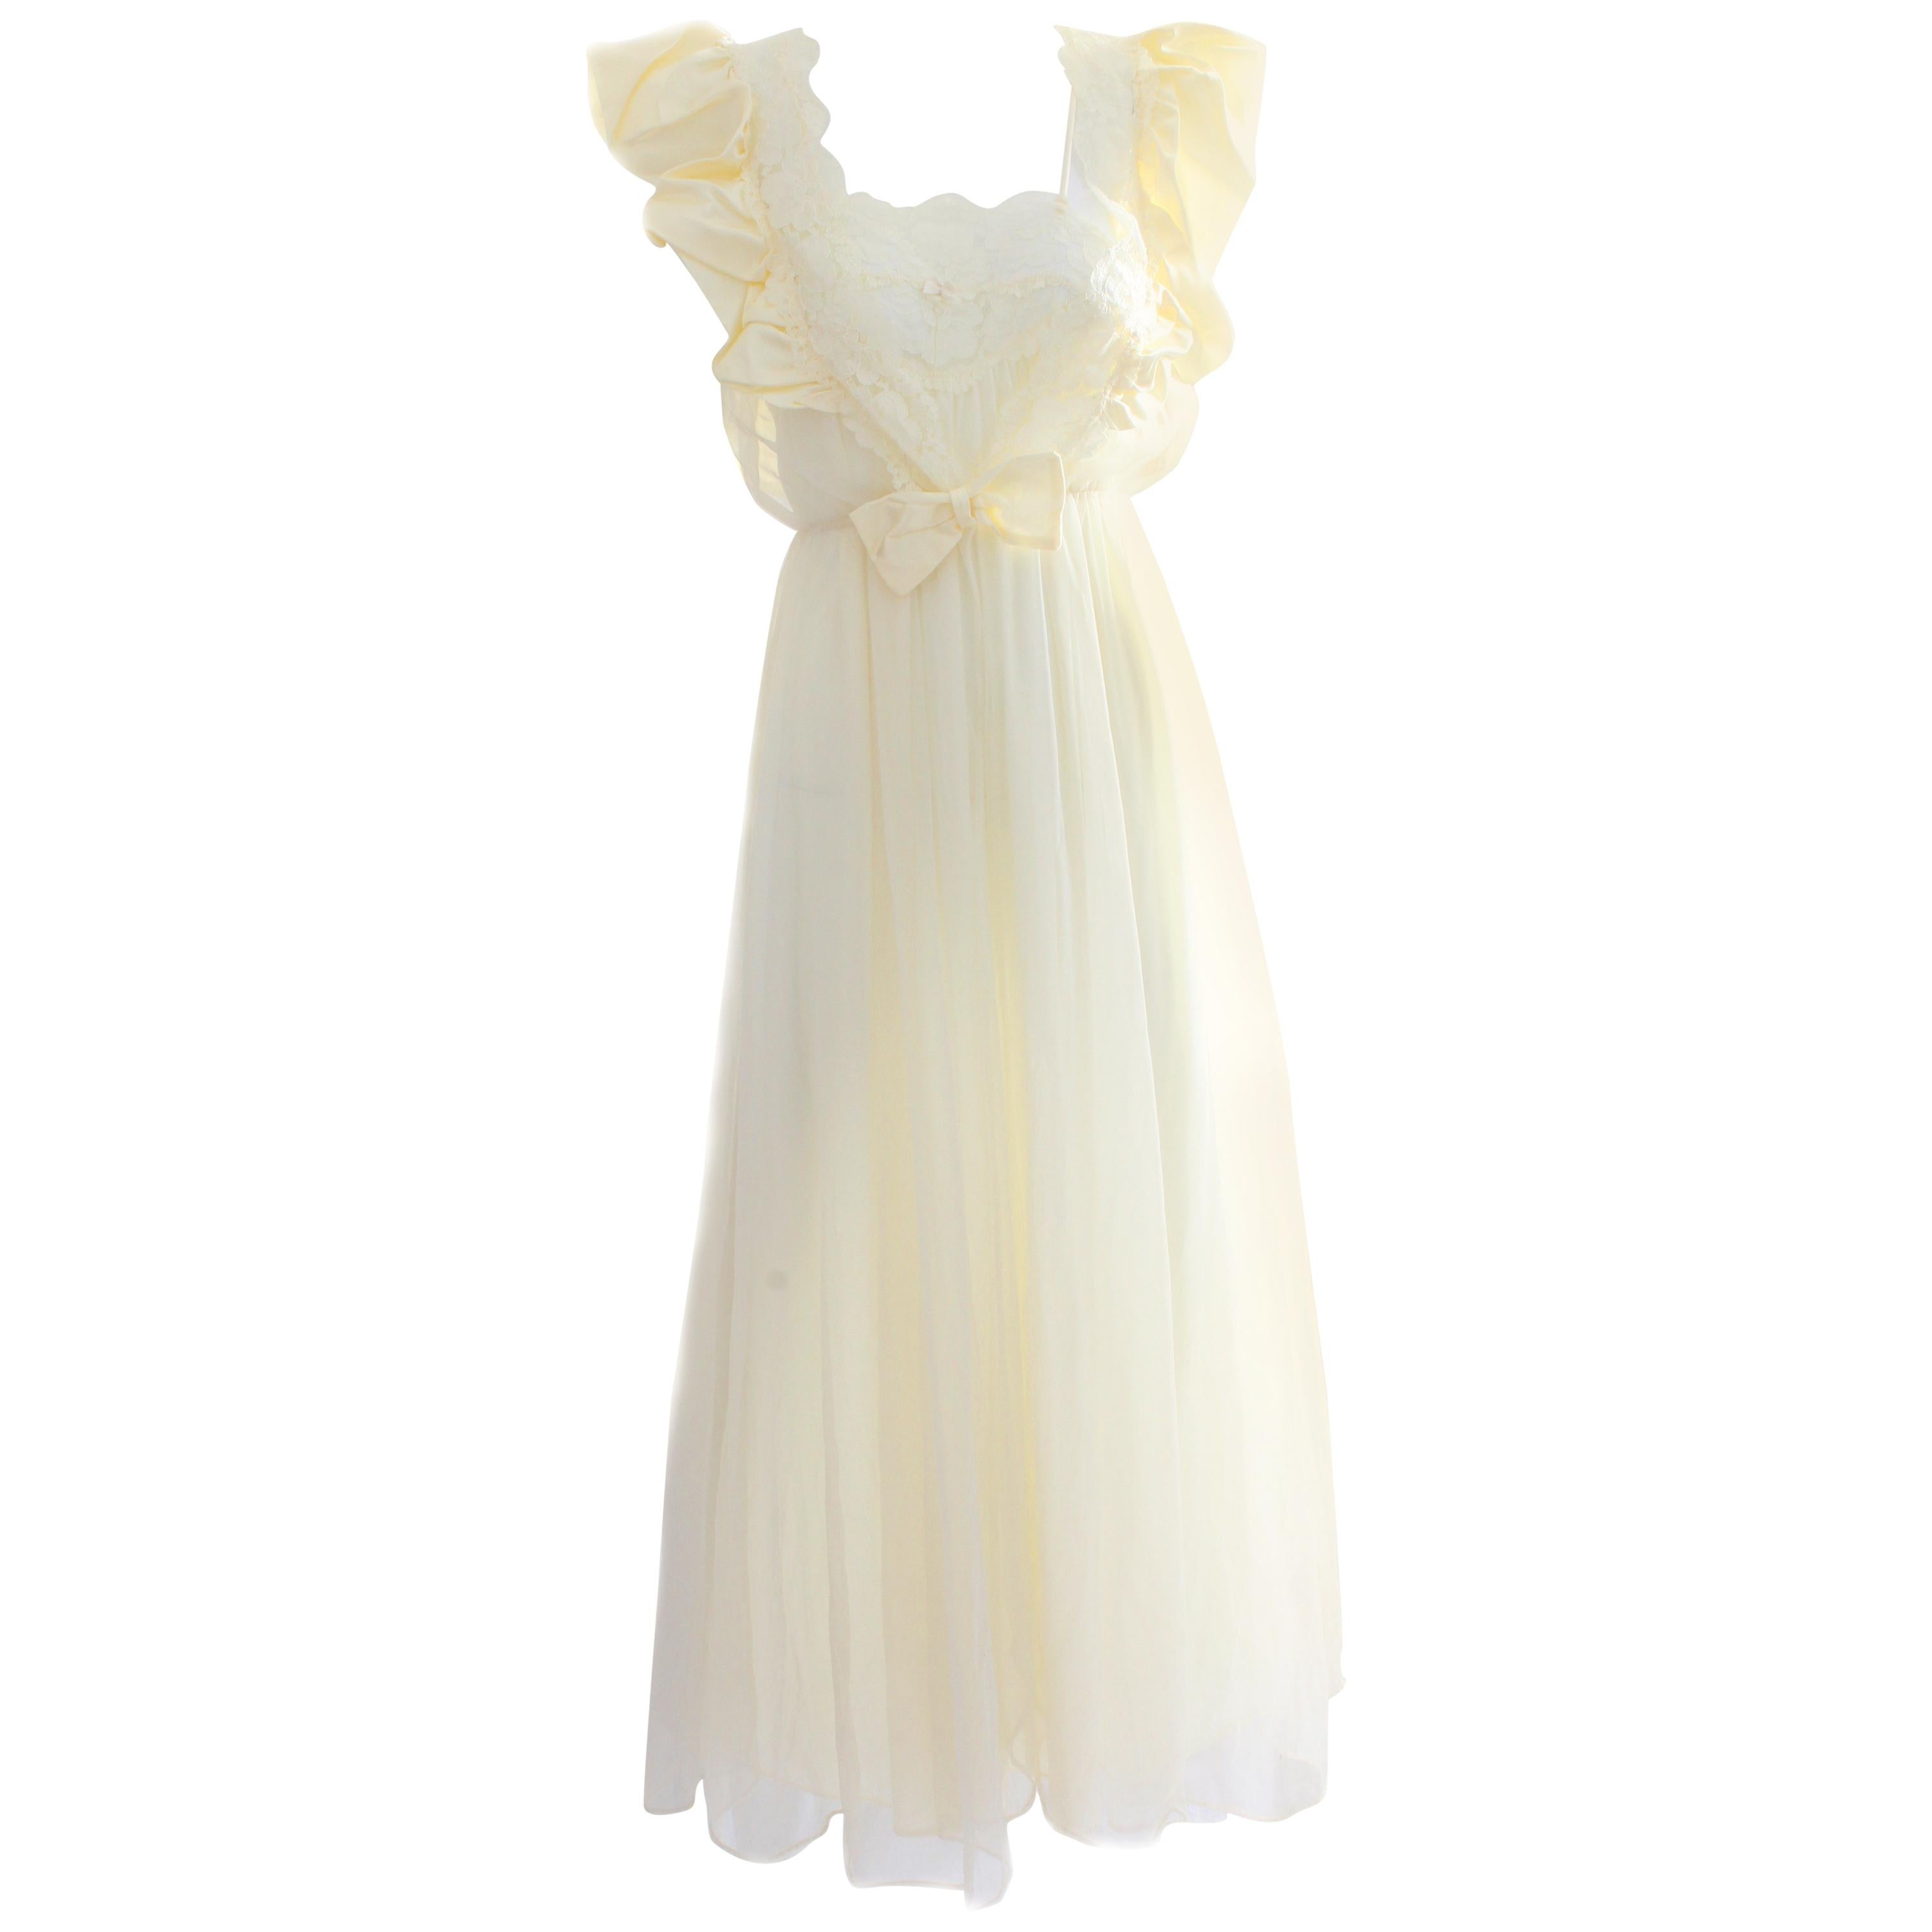 Vintage Peignoir Robe & Long Nightgown Val Mode Satin & Chiffon S New Tags